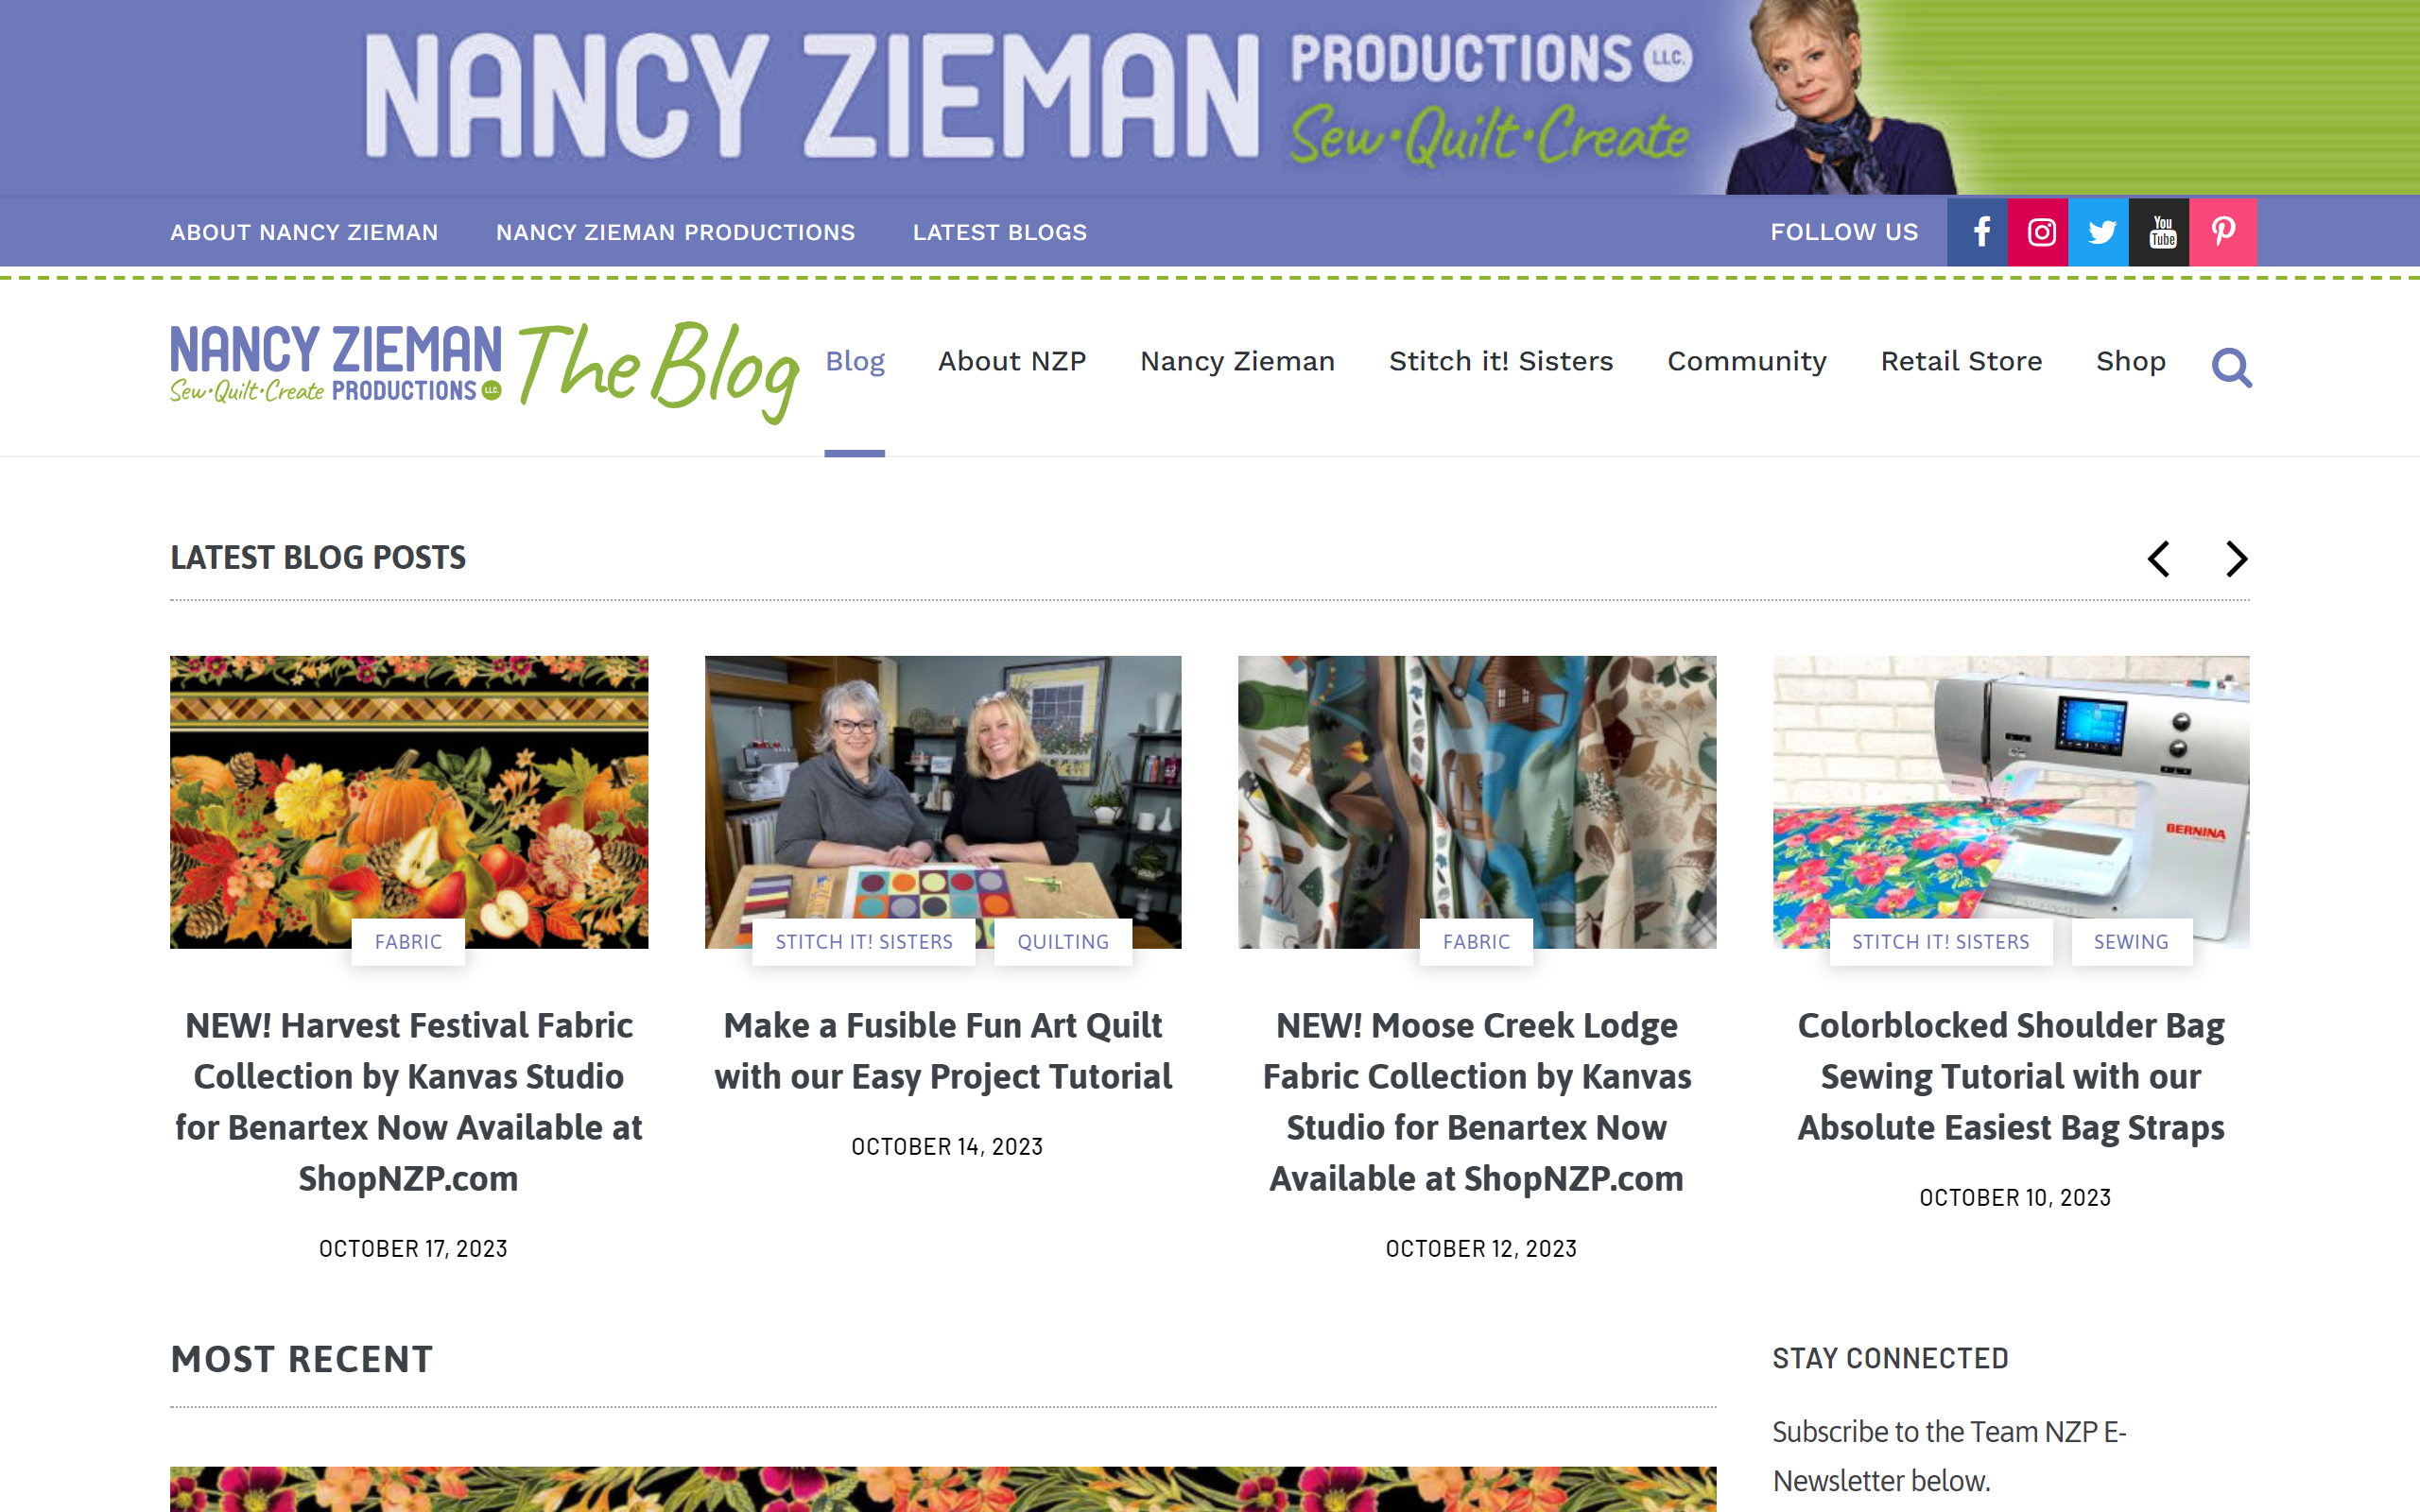 Nancy Zieman Blog sewing blog